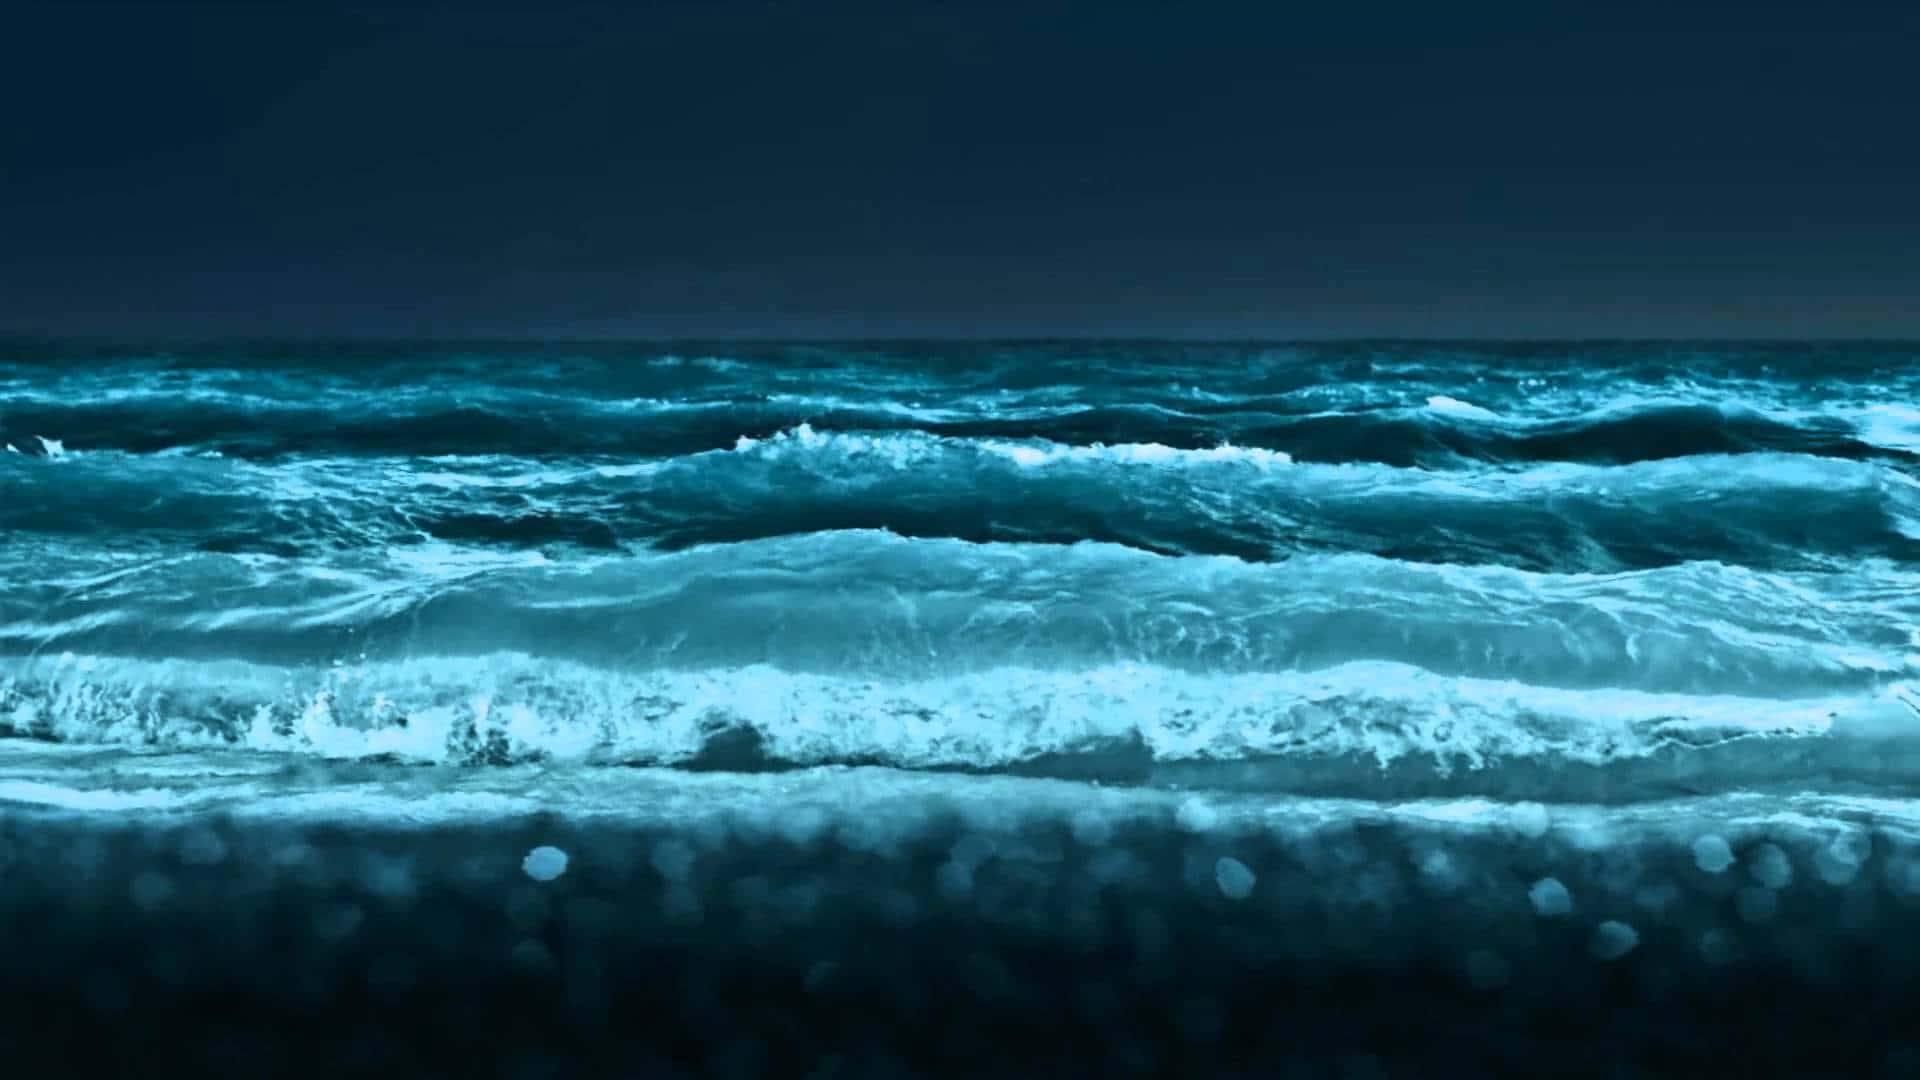 Majestic Ocean Waves Crashing onto Shore